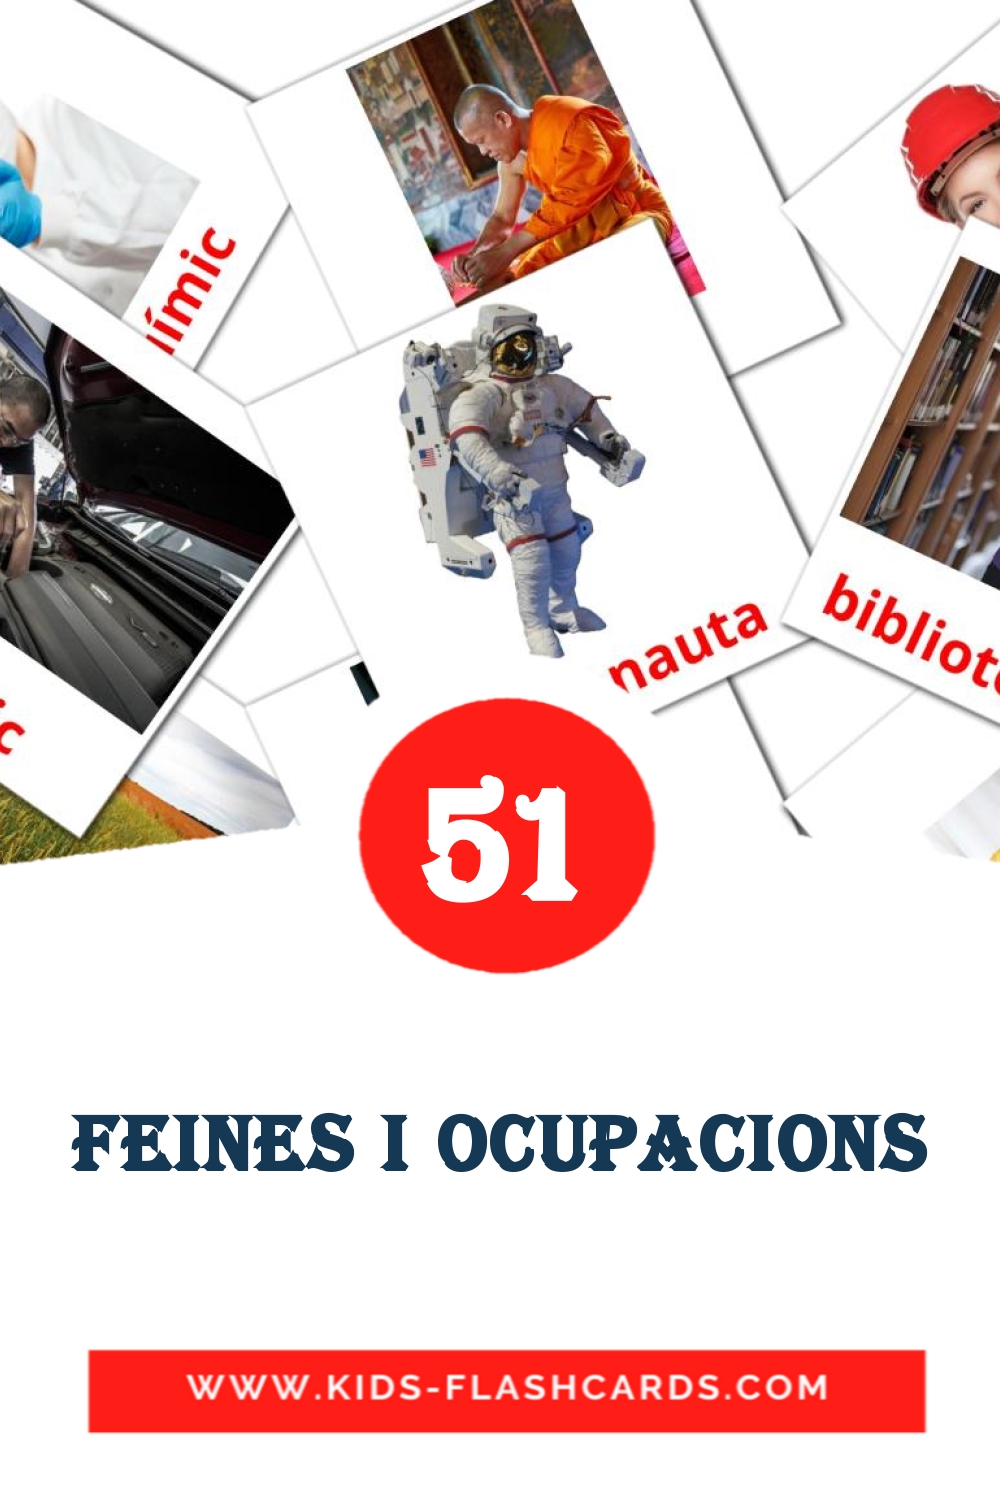 Feines i Ocupacions на catalan для Детского Сада (51 карточка)